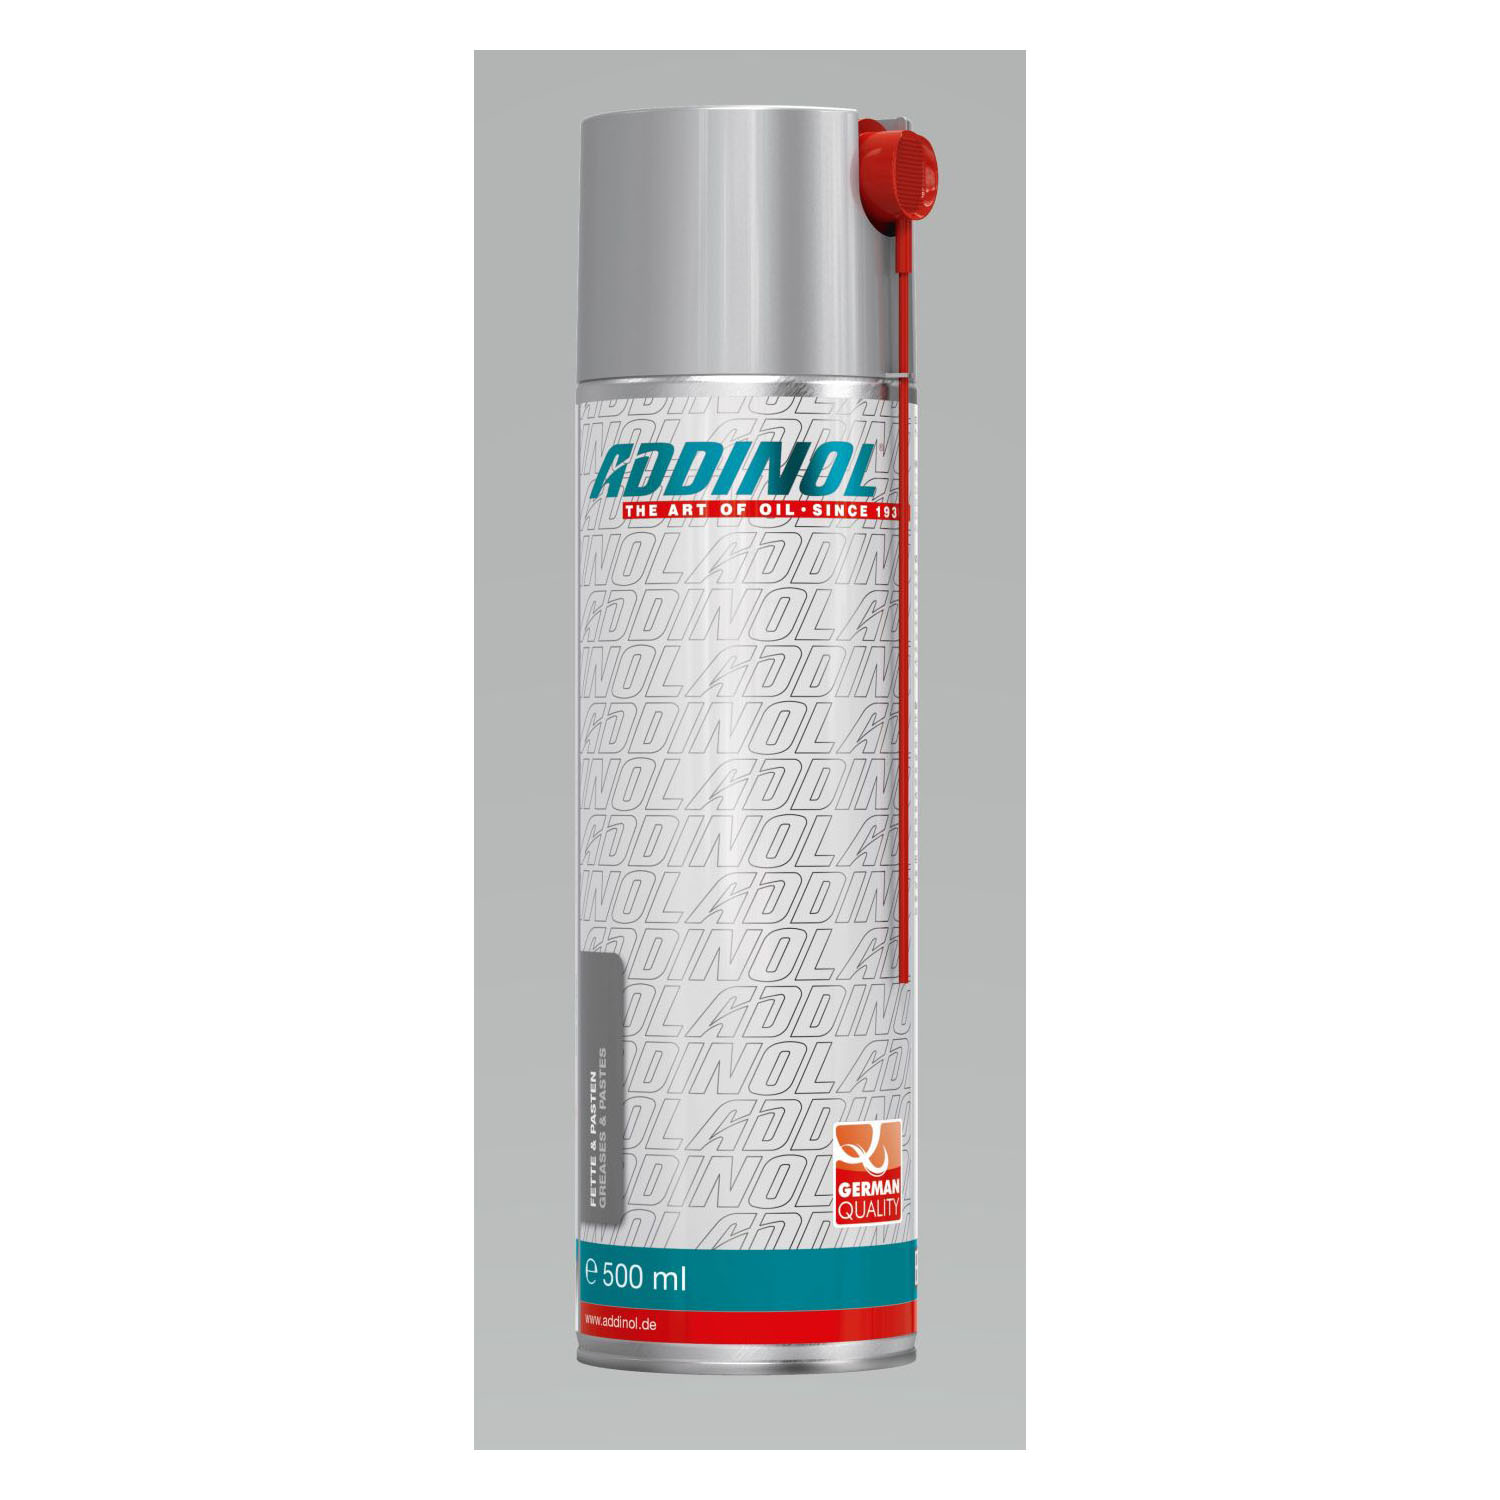 Addinol TSM 401 Spray